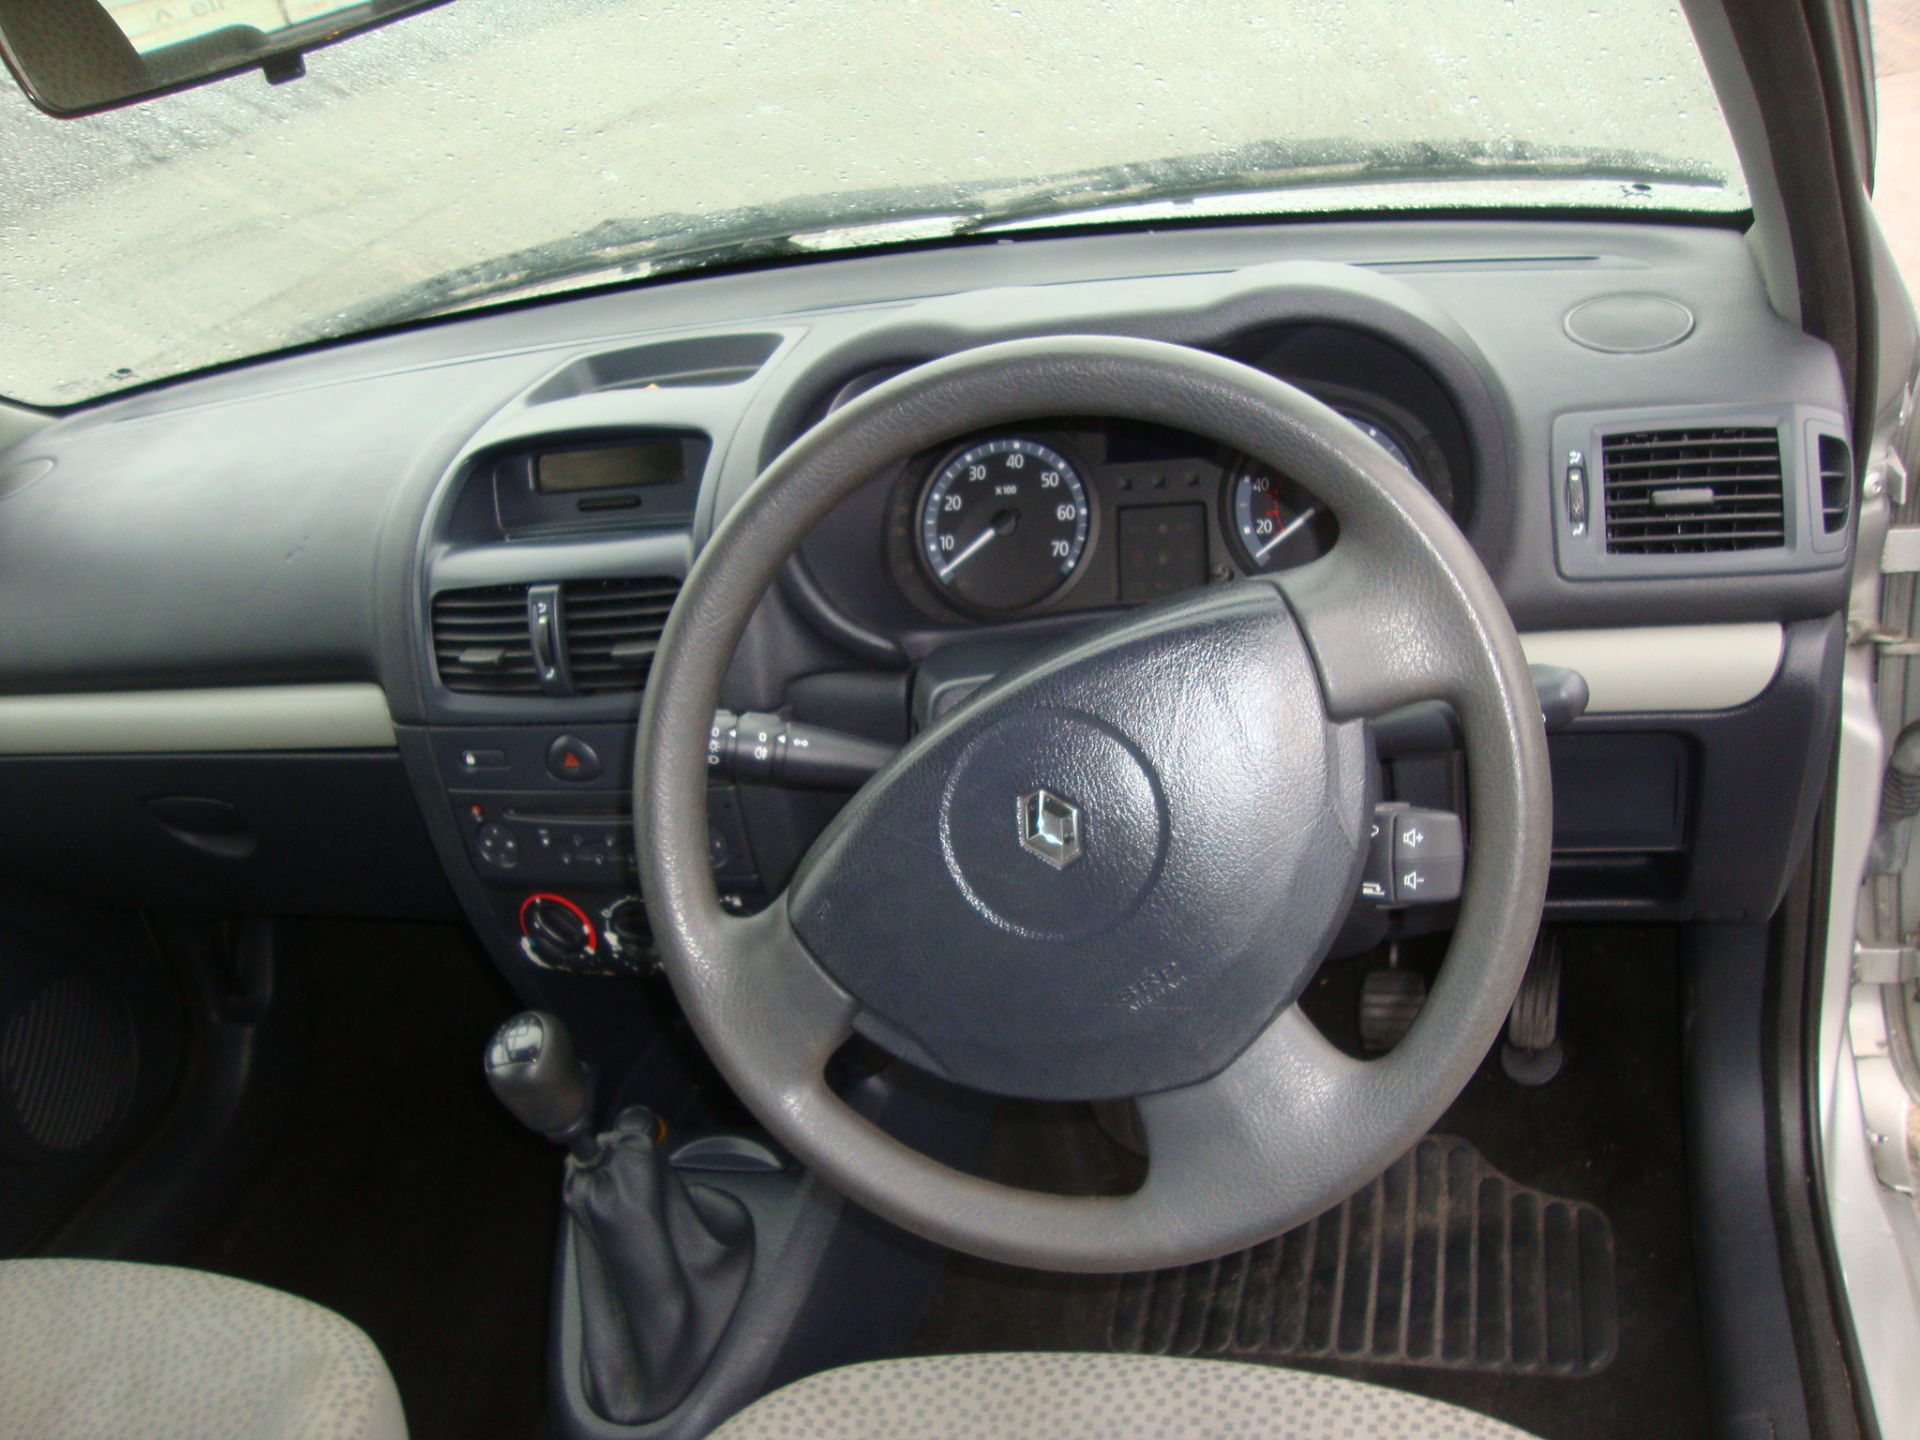 DG06 VYR Renault Clio Campus 3-door hatchback - Image 7 of 11